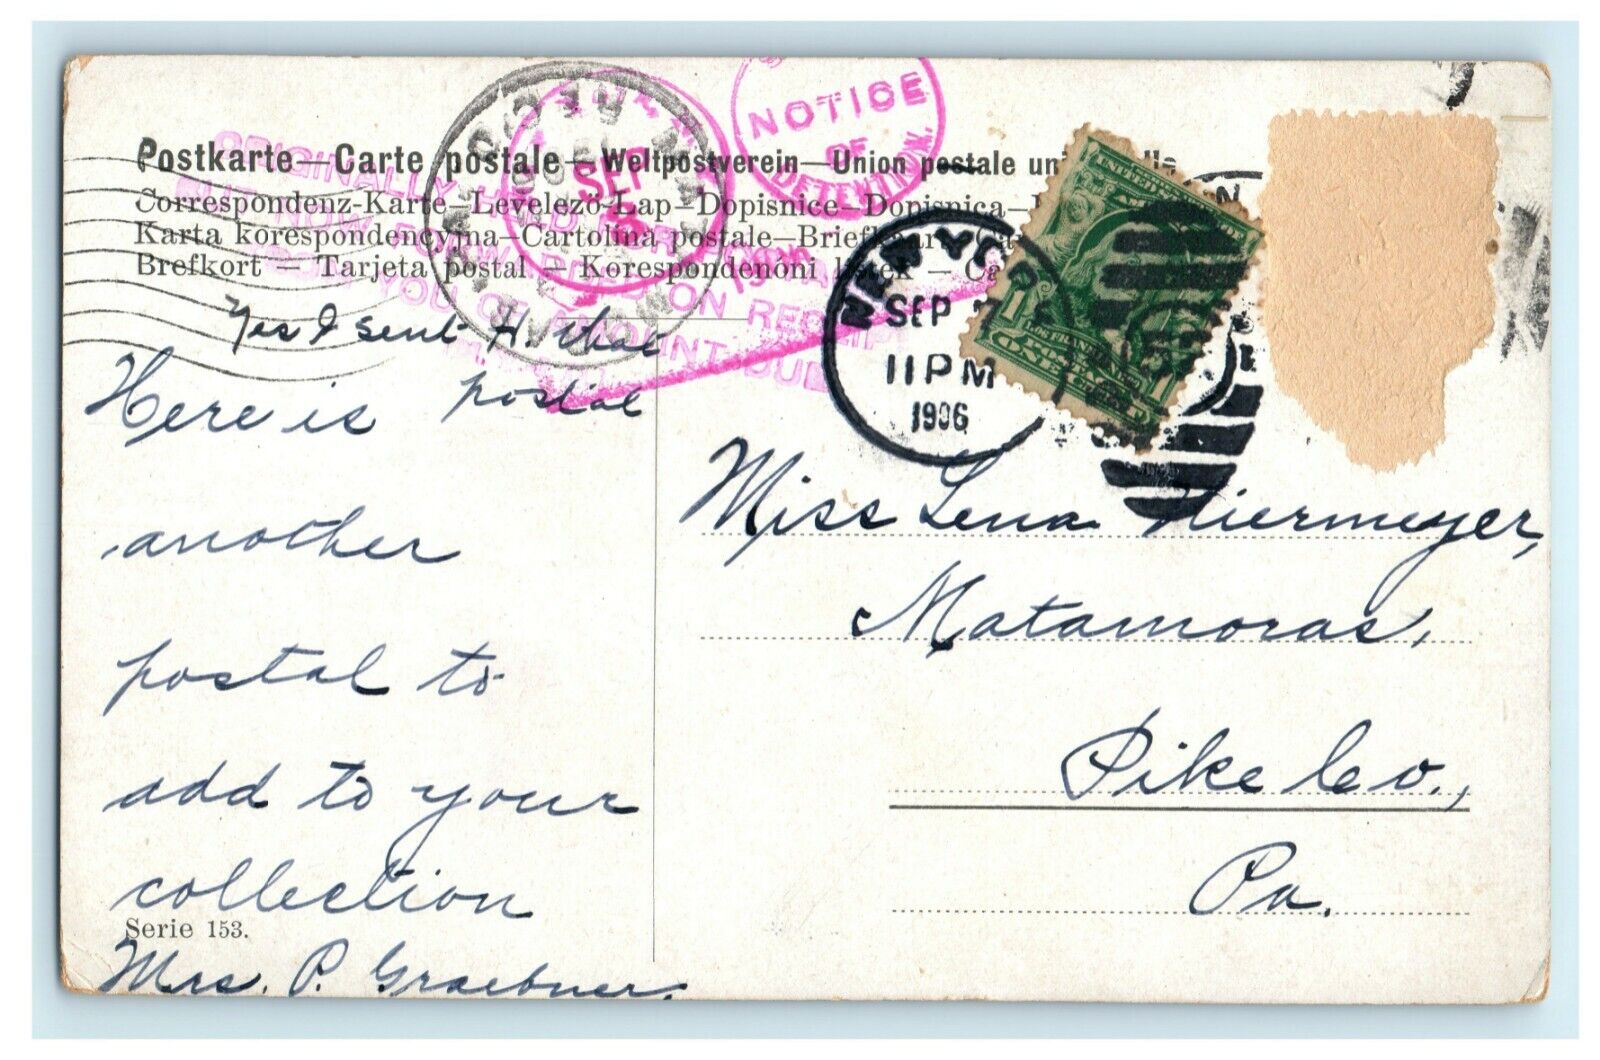 1906 Notice of Detention Postage Due Rare Postmark Vintage Antique Postcard